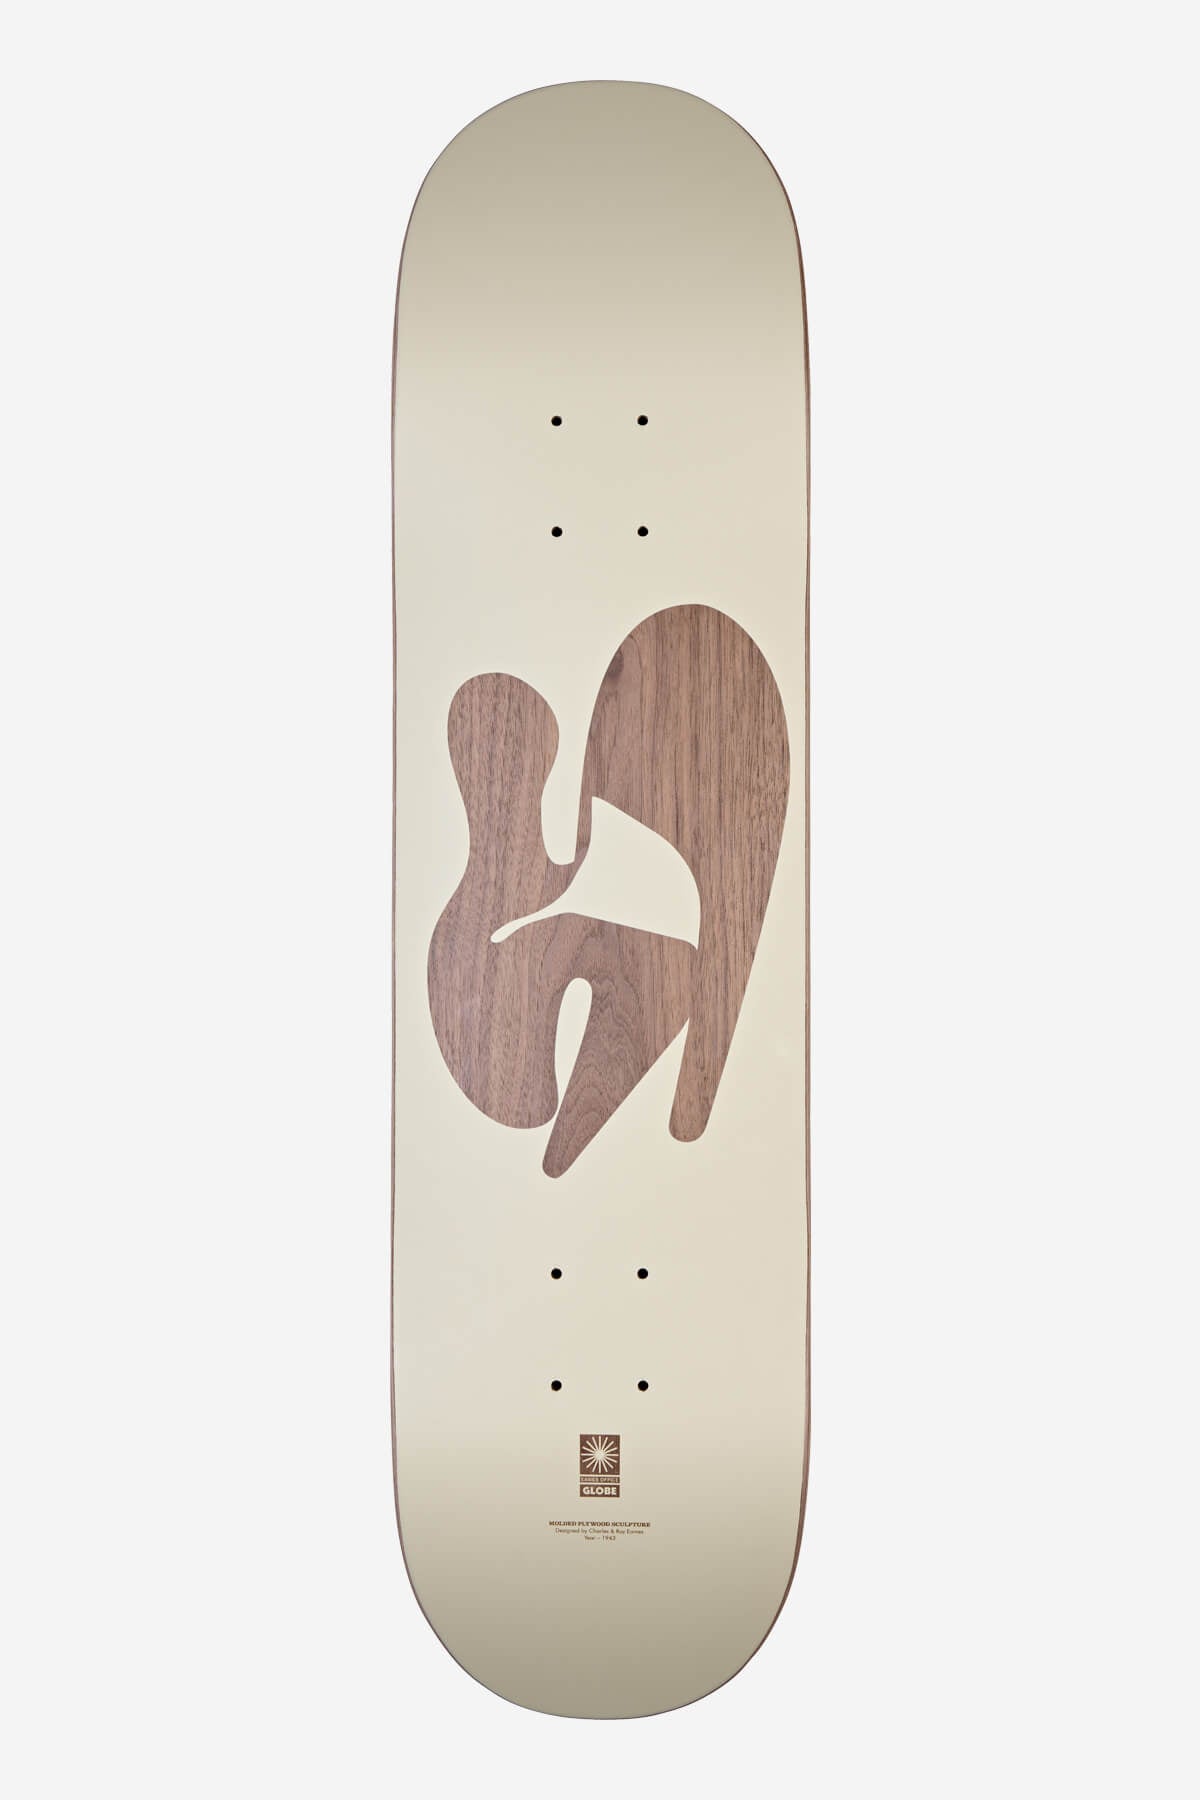 Globe - Silhouette Eames - Plywood Sculpture - 8,0". Skateboard Deck